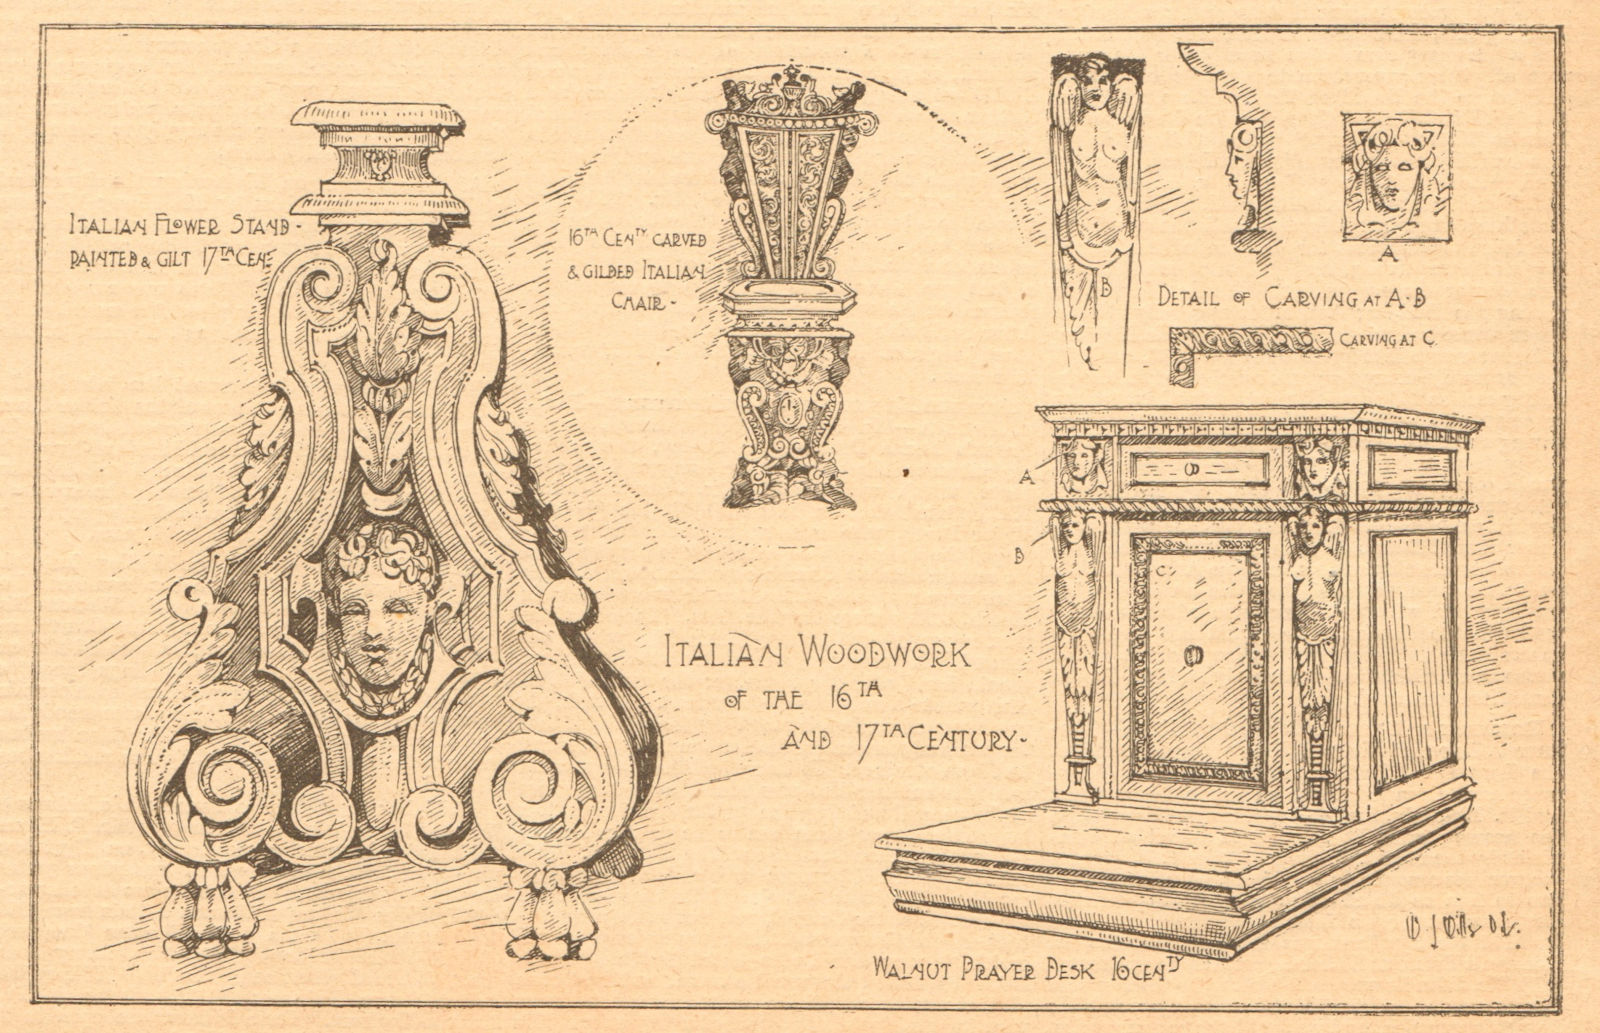 Associate Product Italian woodwork 16th 17th century. Flower stand chair walnut prayer desk 1901